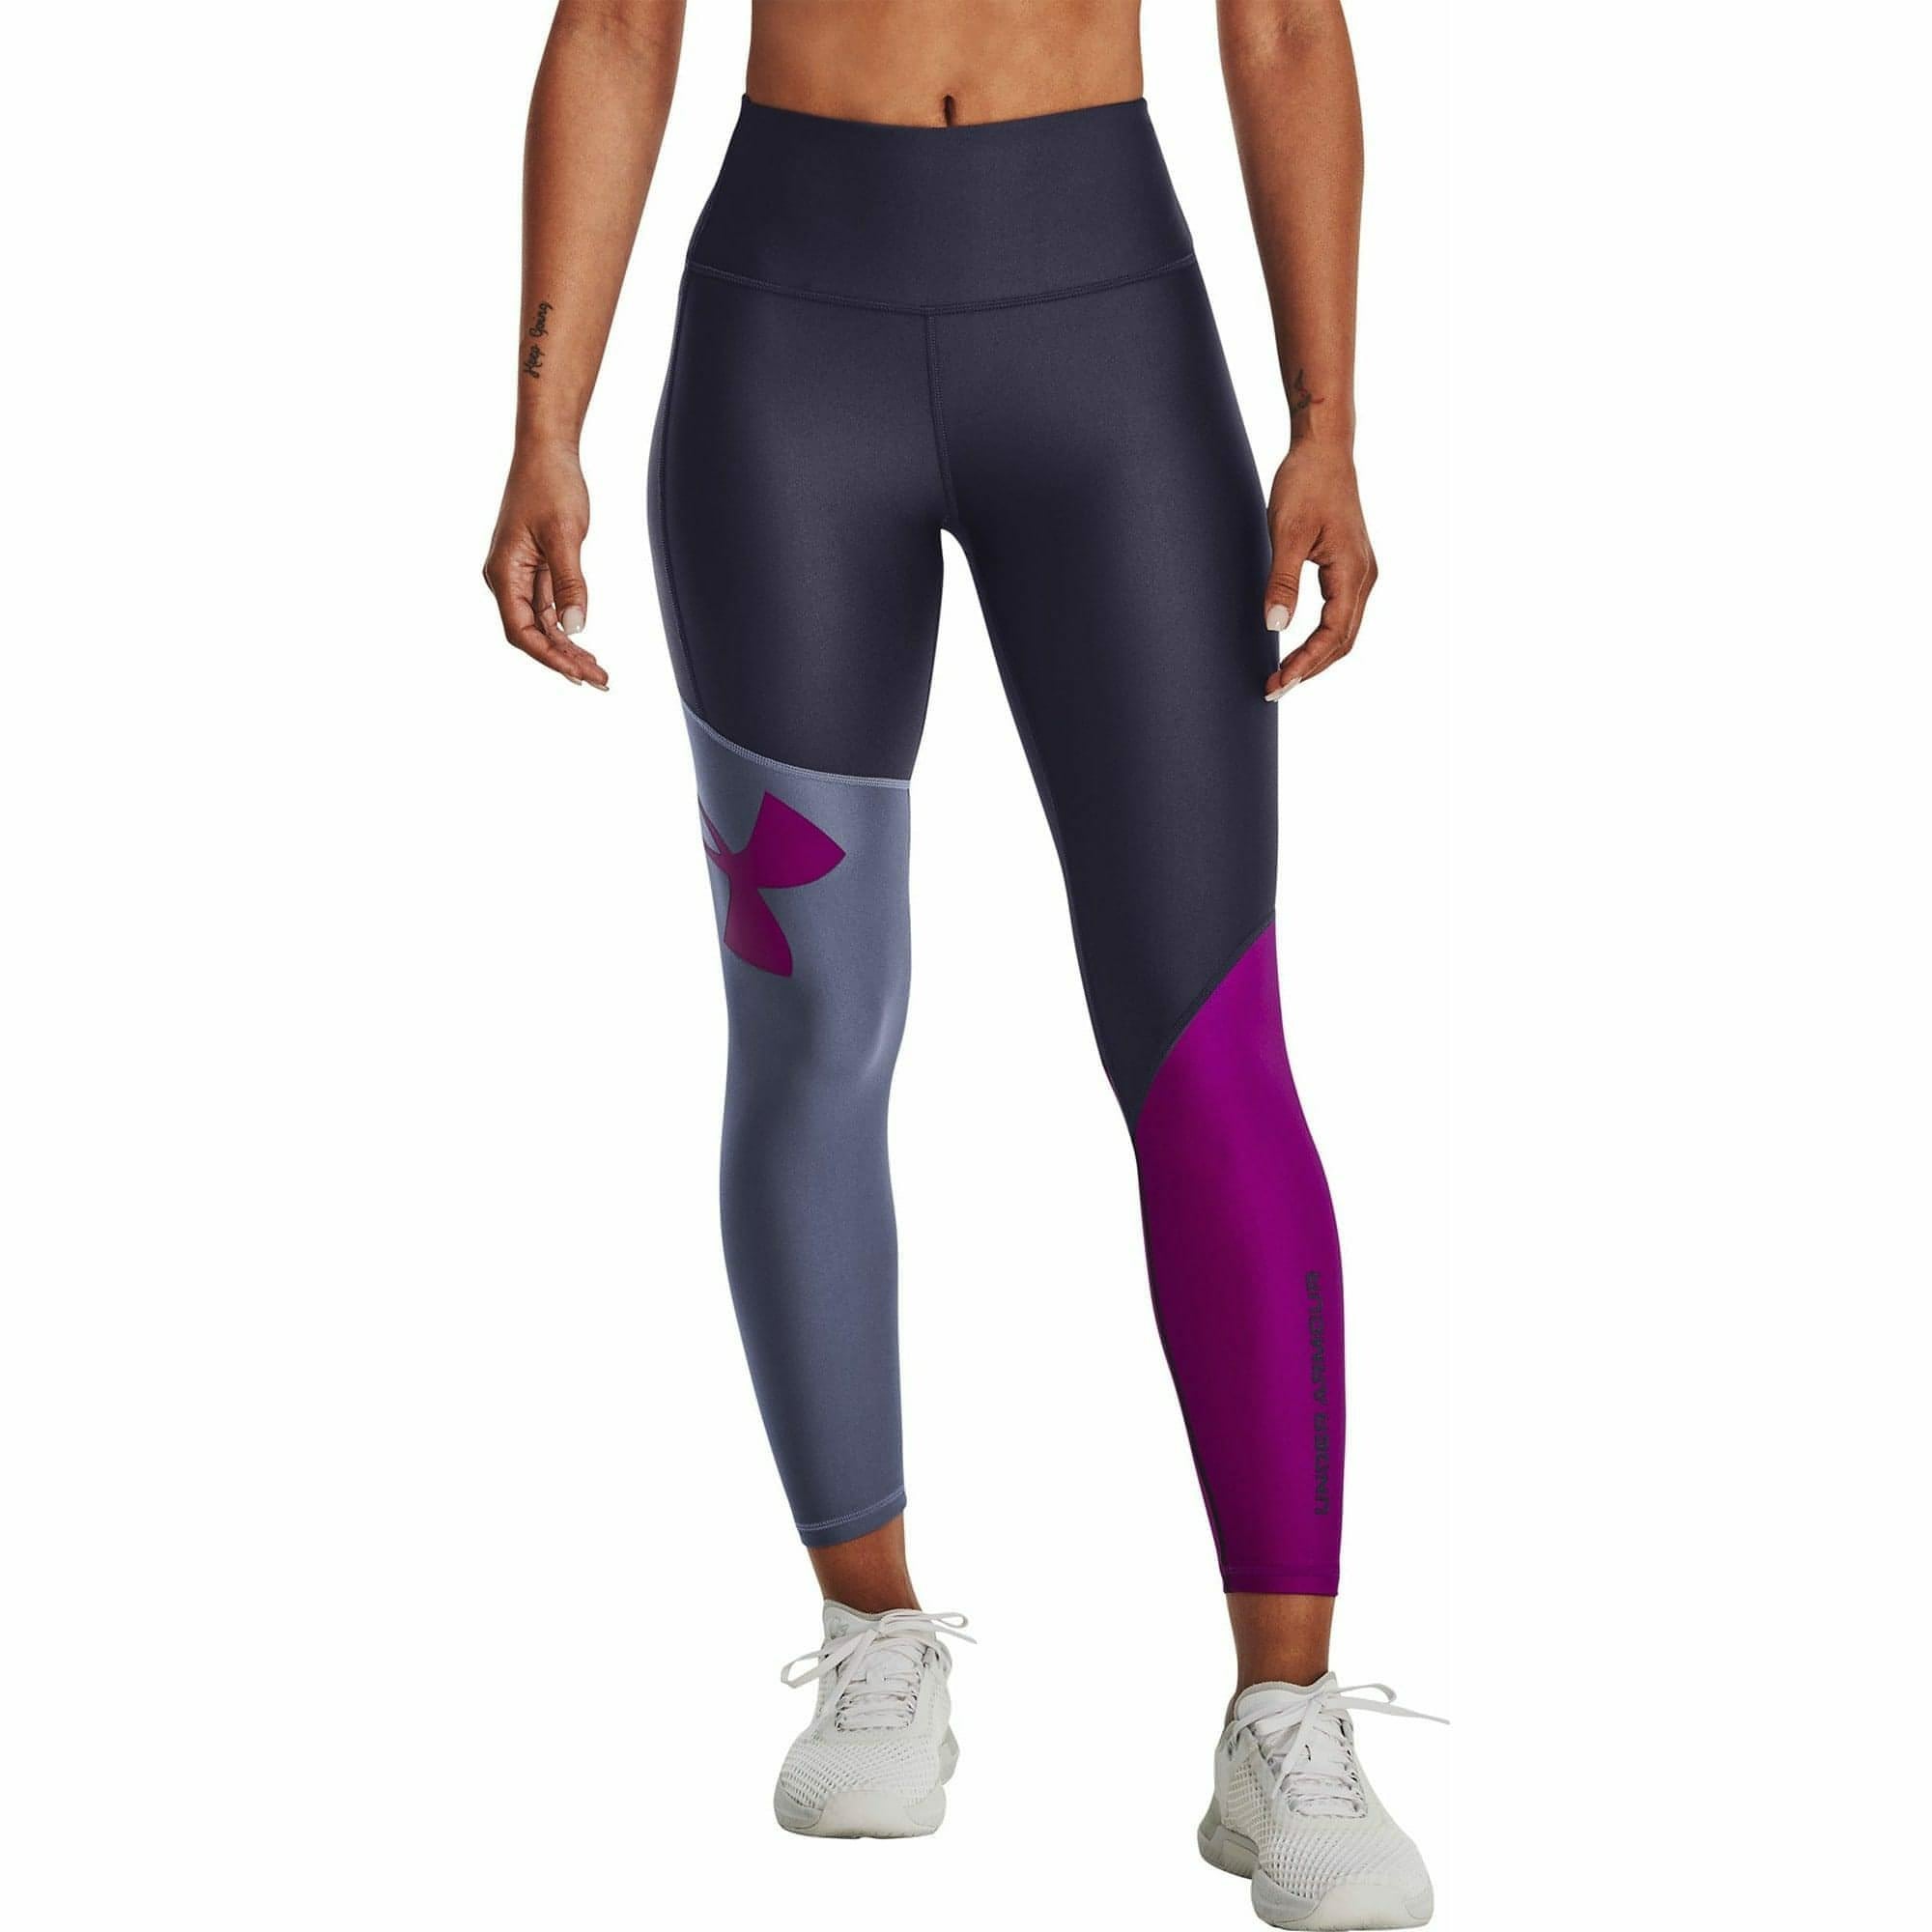 https://cdn.shopify.com/s/files/1/0564/9521/0704/products/under-armour-heatgear-womens-long-training-tights-purple-37412051747024.jpg